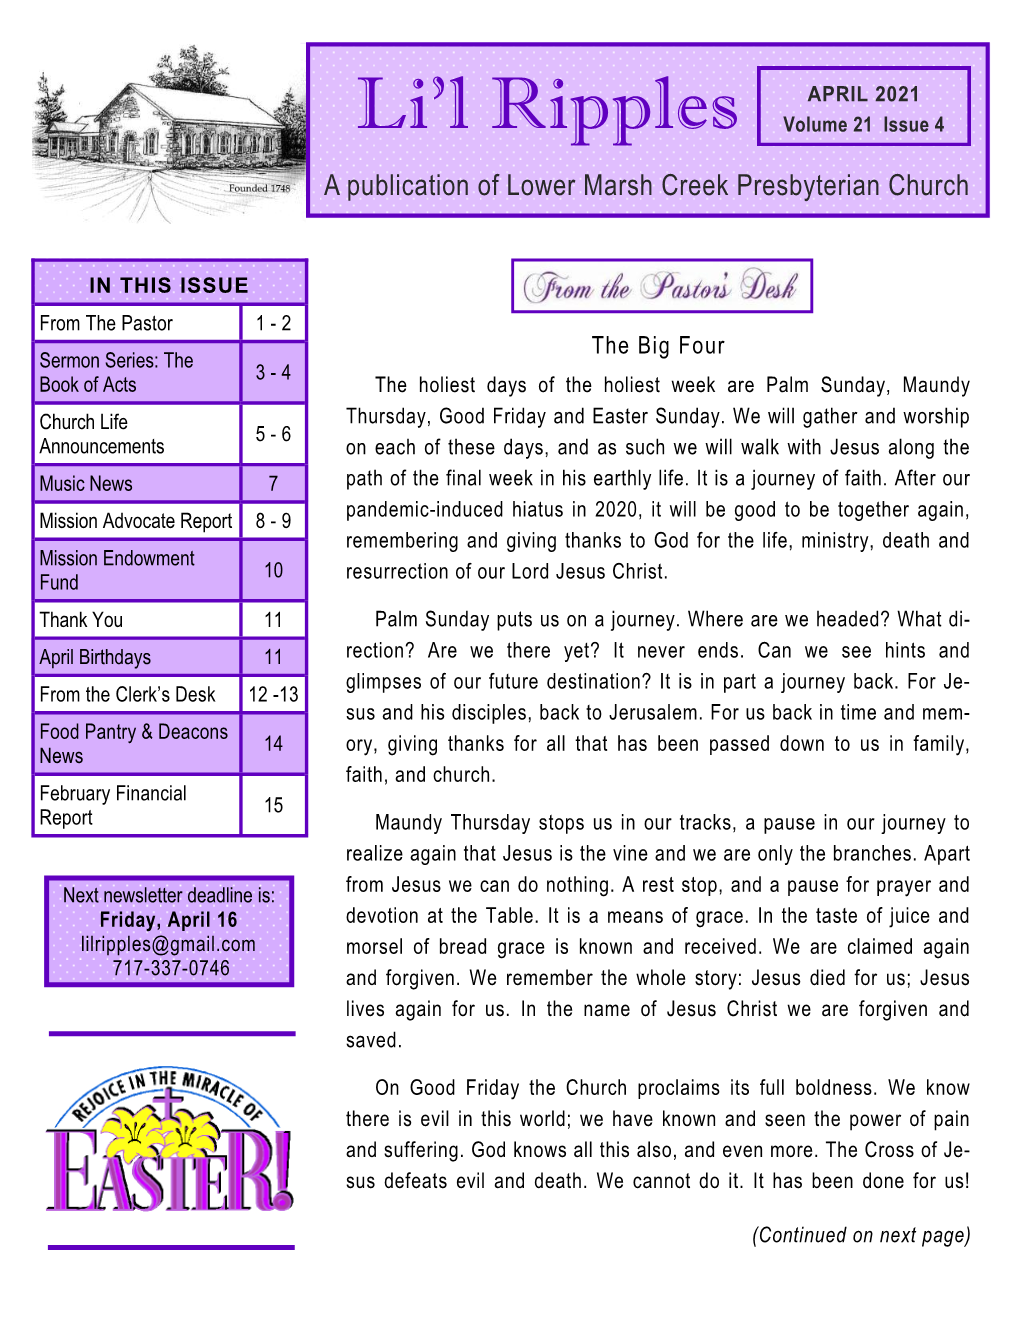 APRIL 2021 Li’L Ripples Volume 21 Issue 4 a Publication of Lower Marsh Creek Presbyterian Church